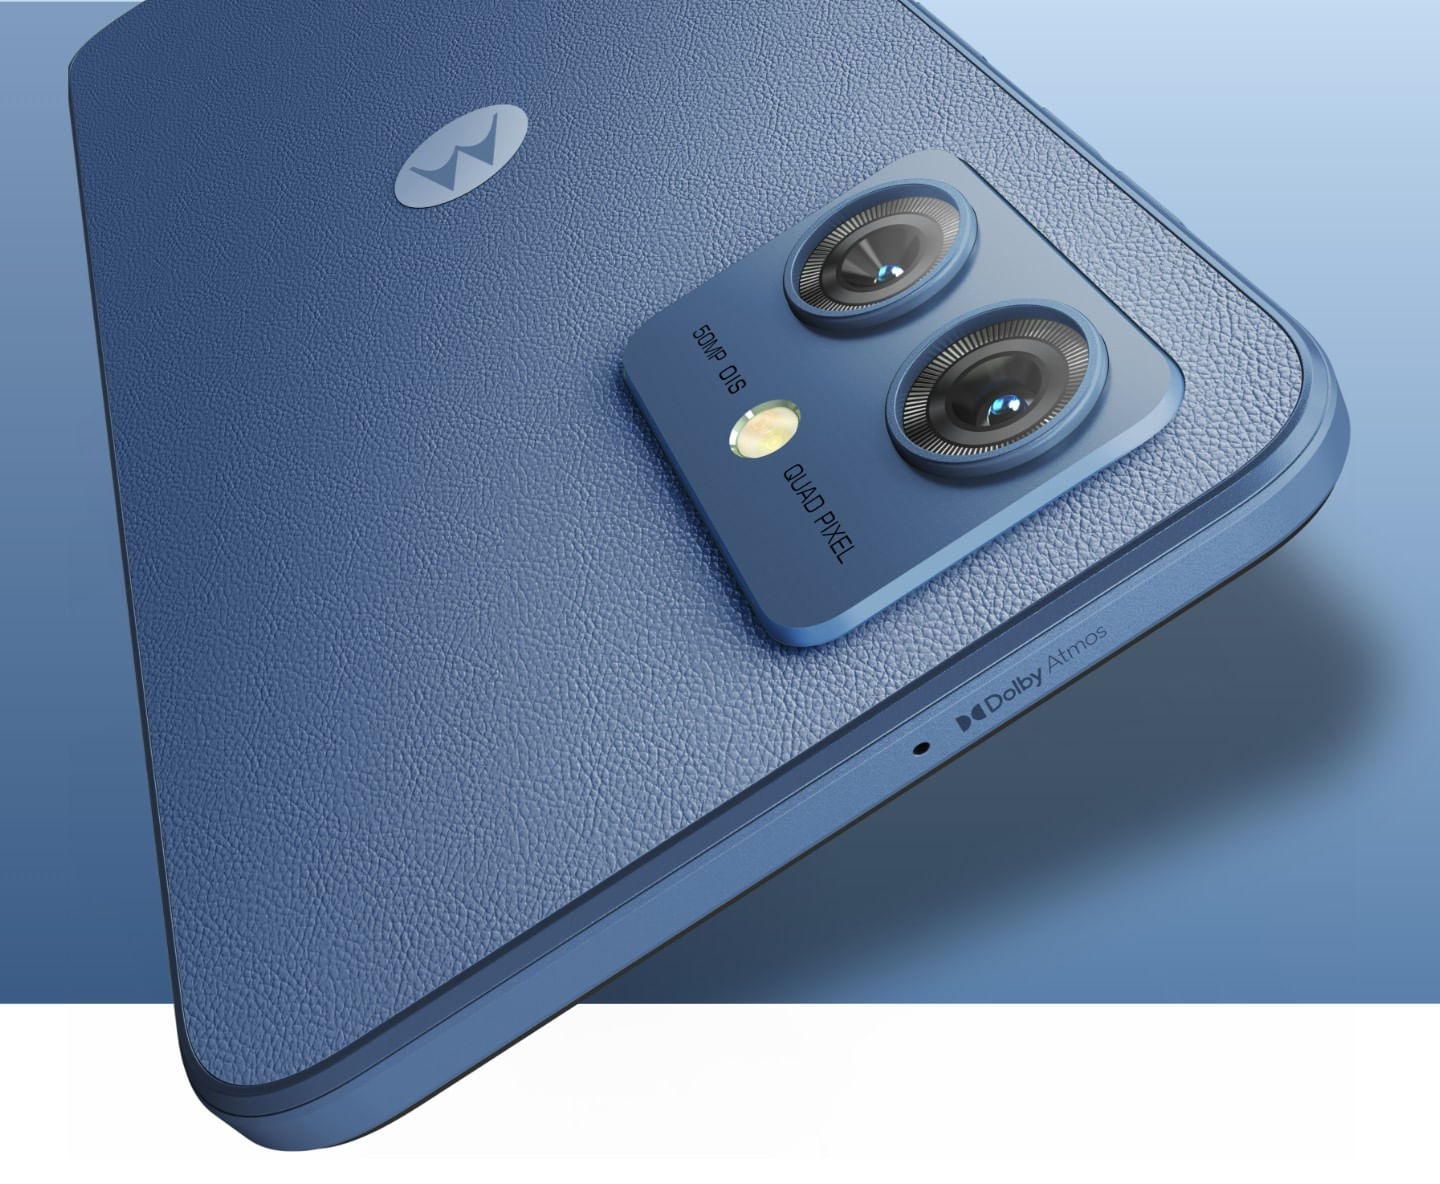 Motorola G14 128GB Azul Desbloqueados